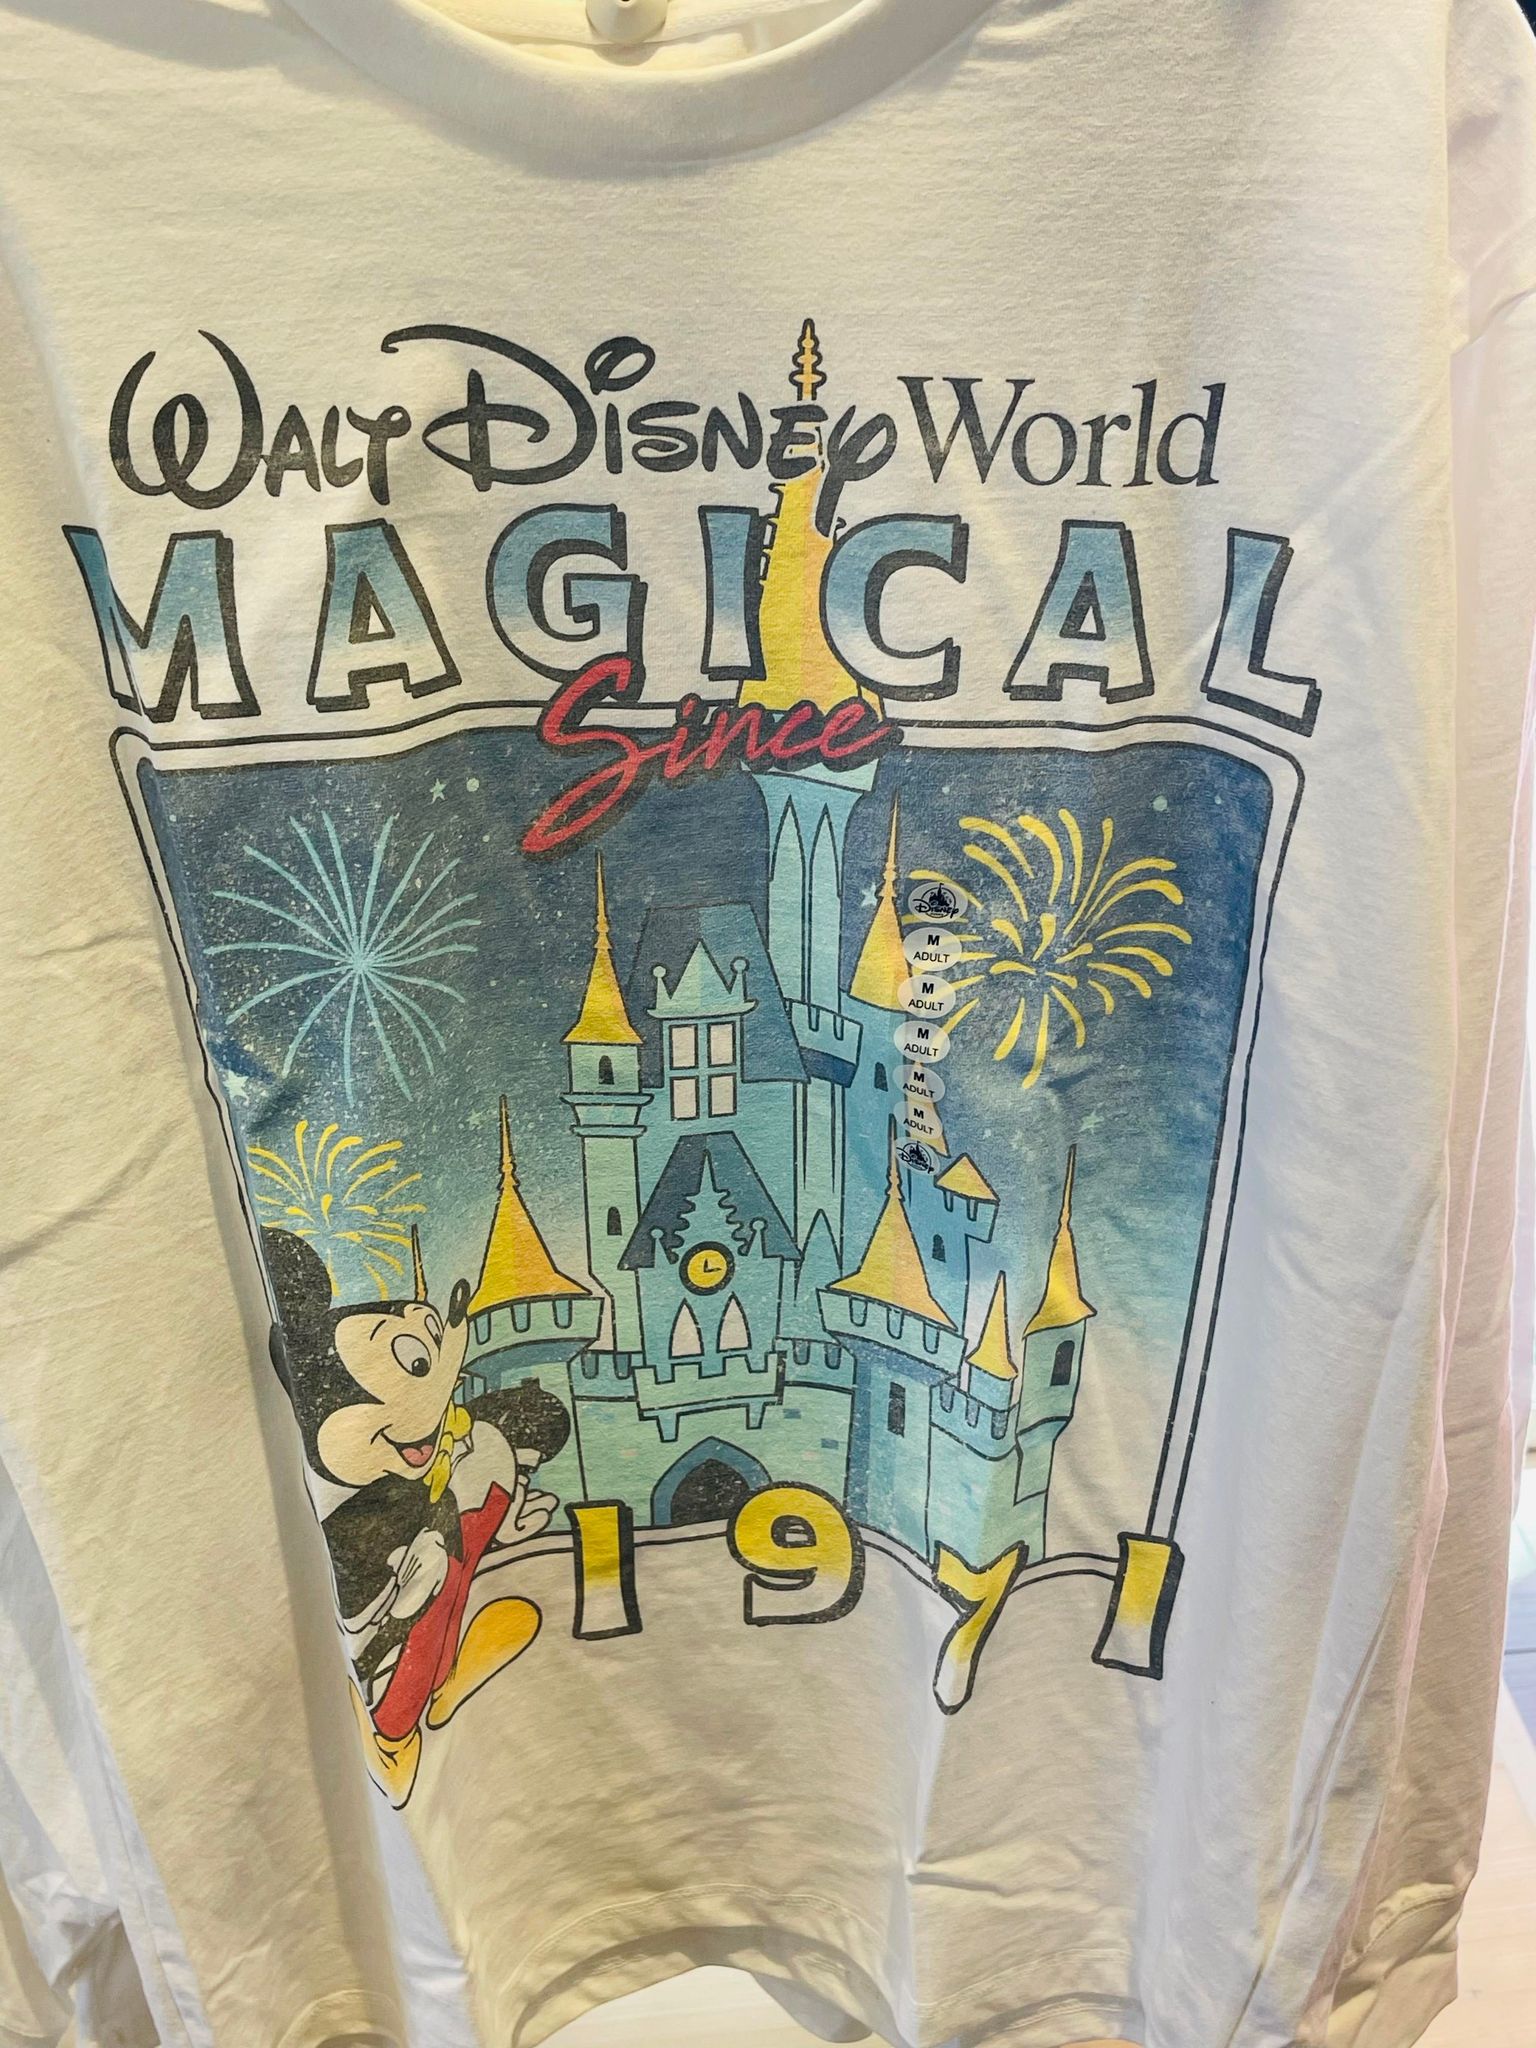 New Long-Sleeved Walt Disney World Shirt Brings Vintage Style to